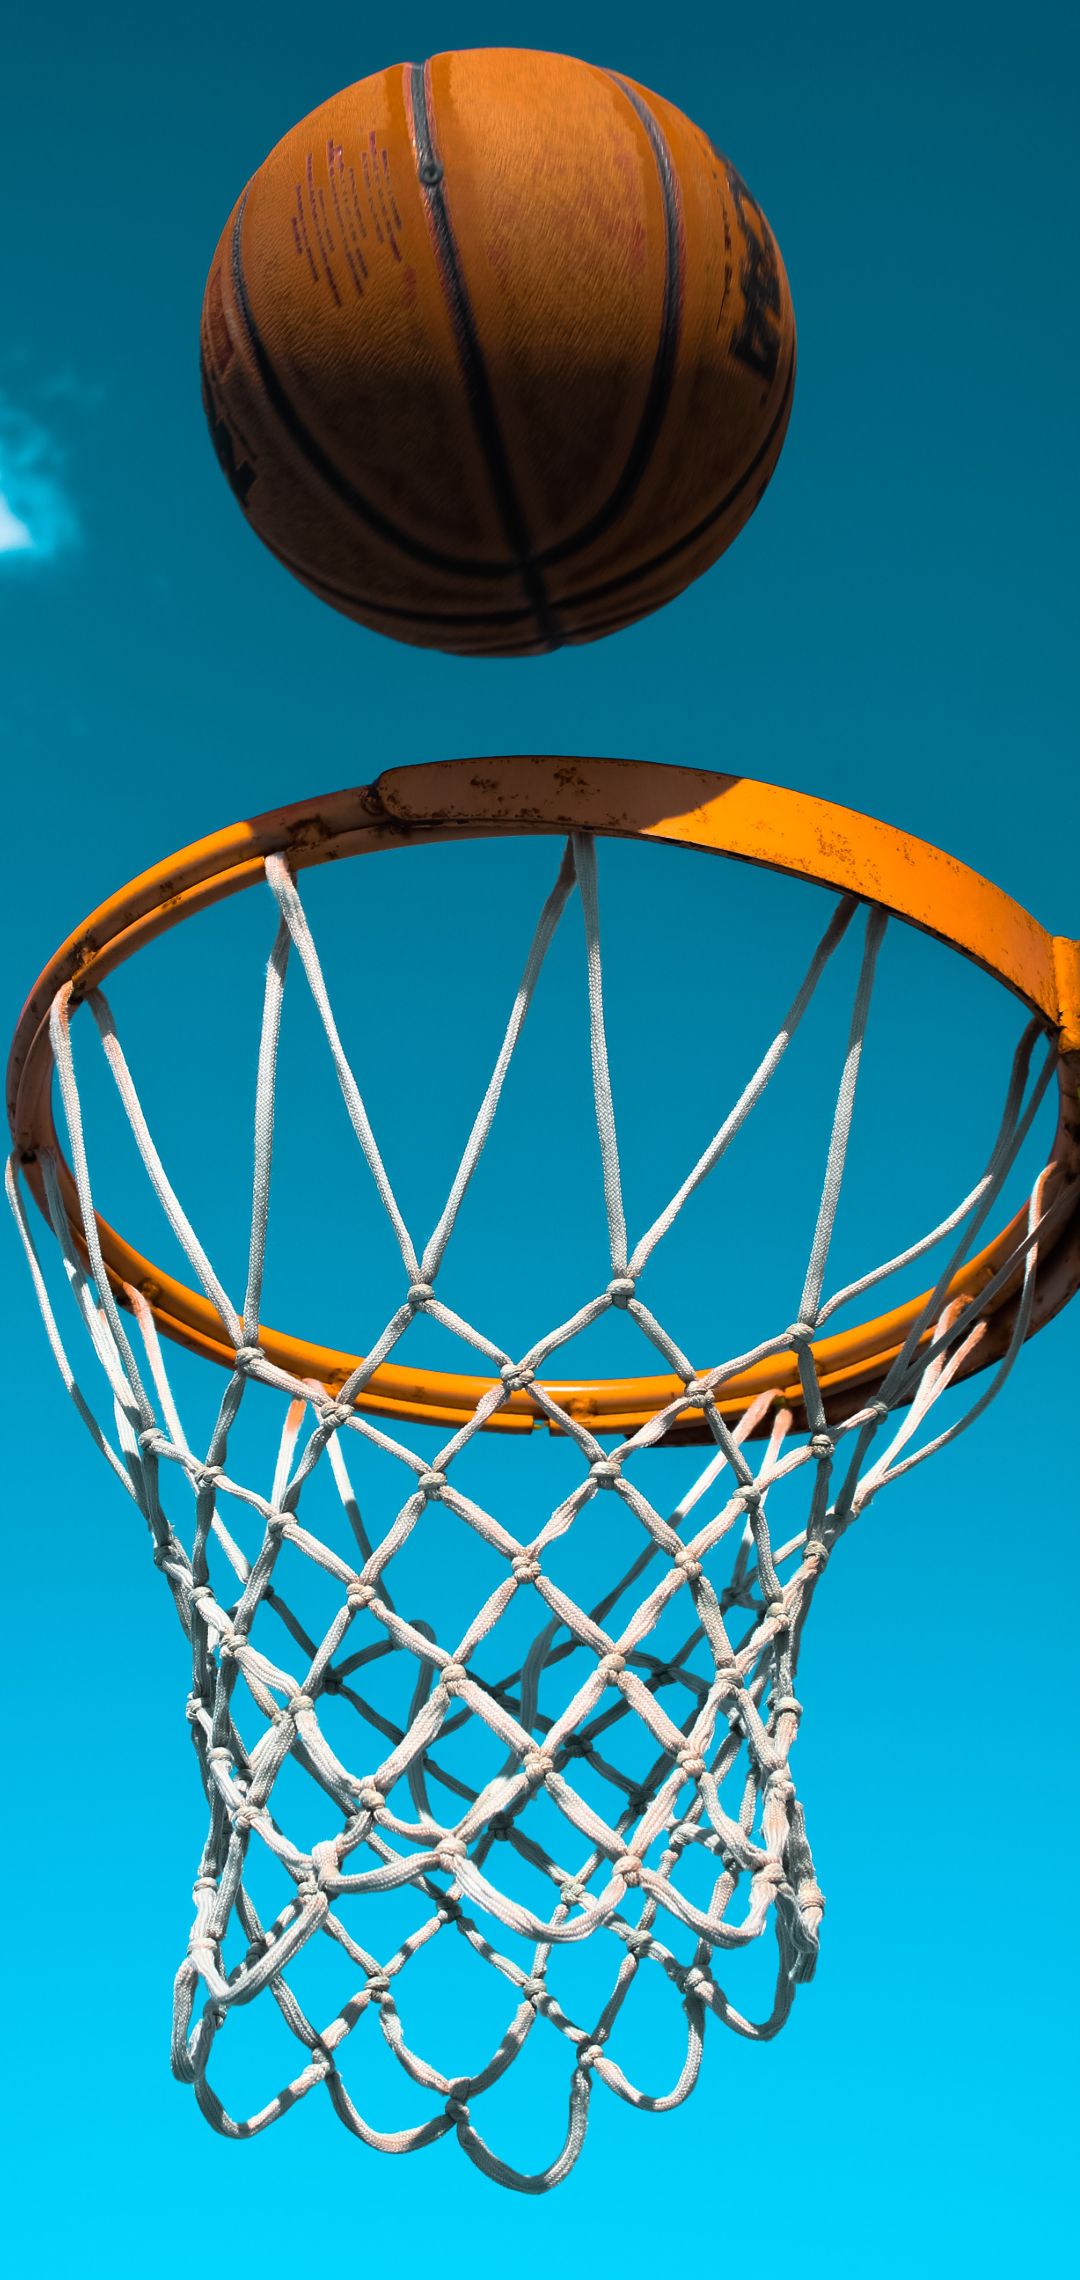 basketball background iphone